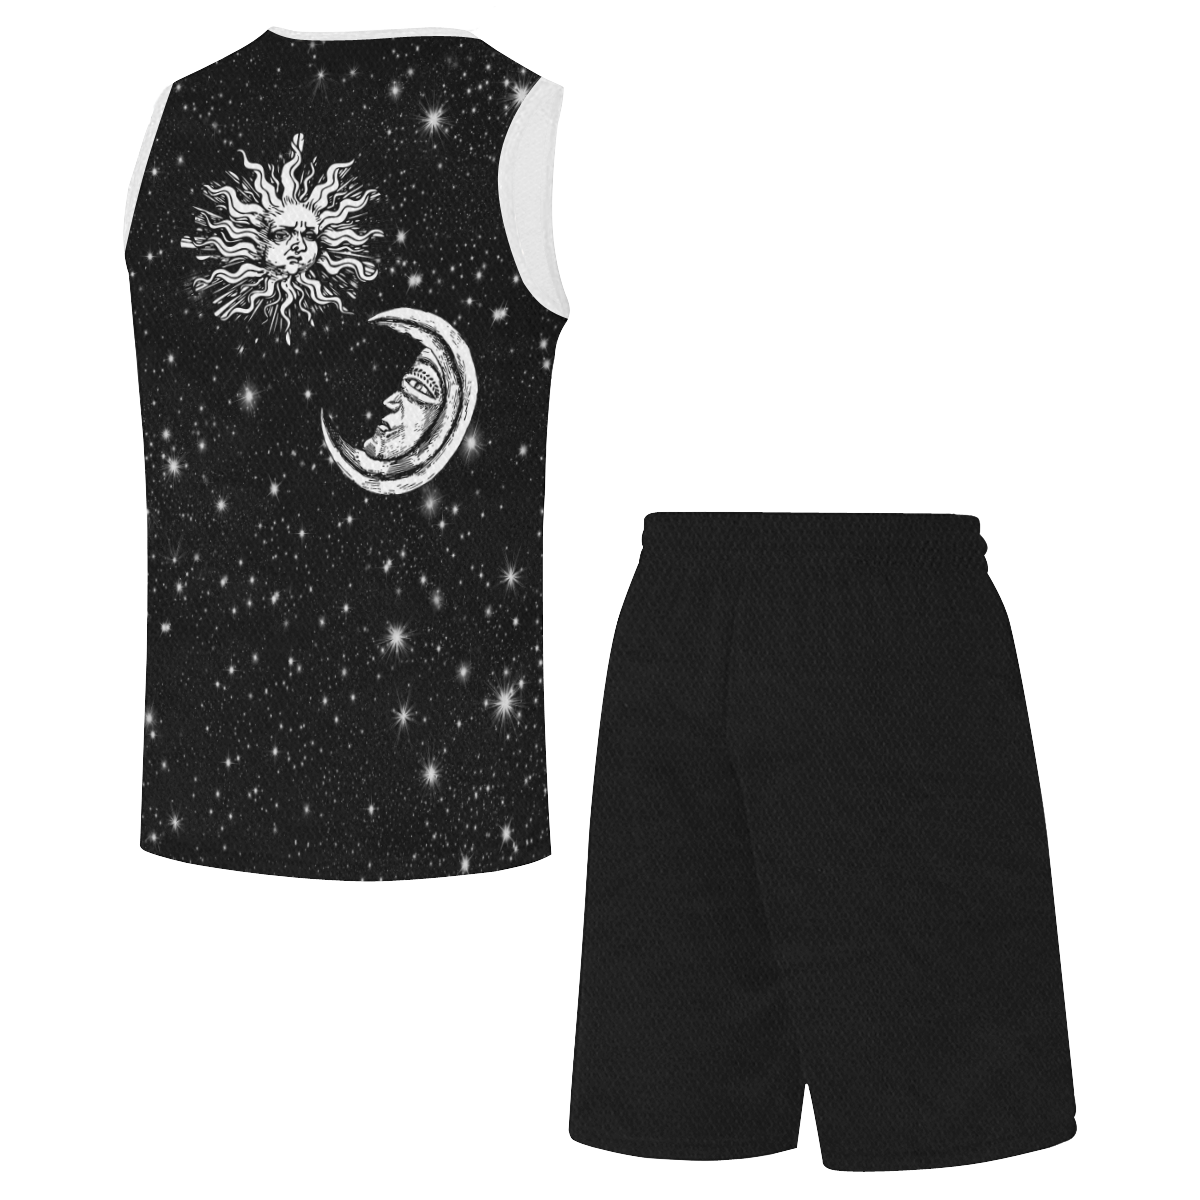 Mystic Moon and Sun All Over Print Basketball Uniform